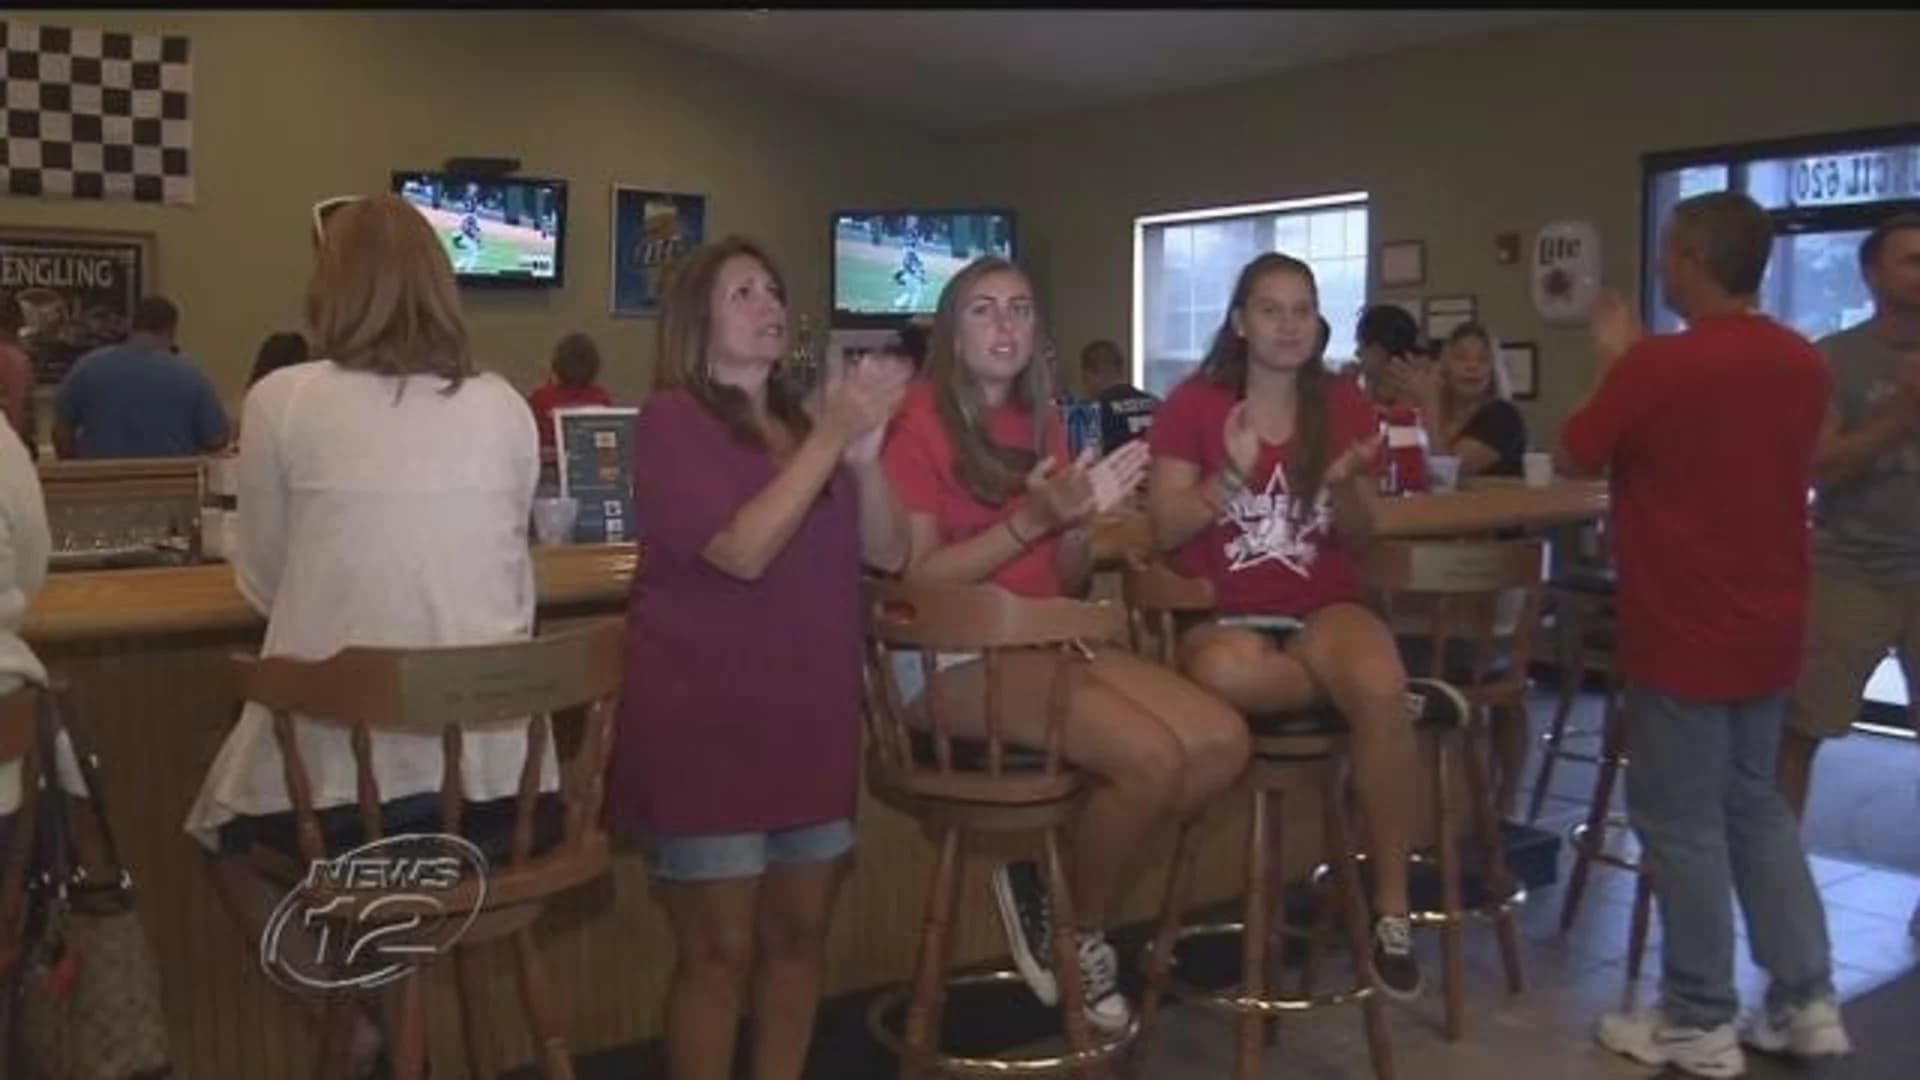 Despite loss, Jackson community cheers on Little League team